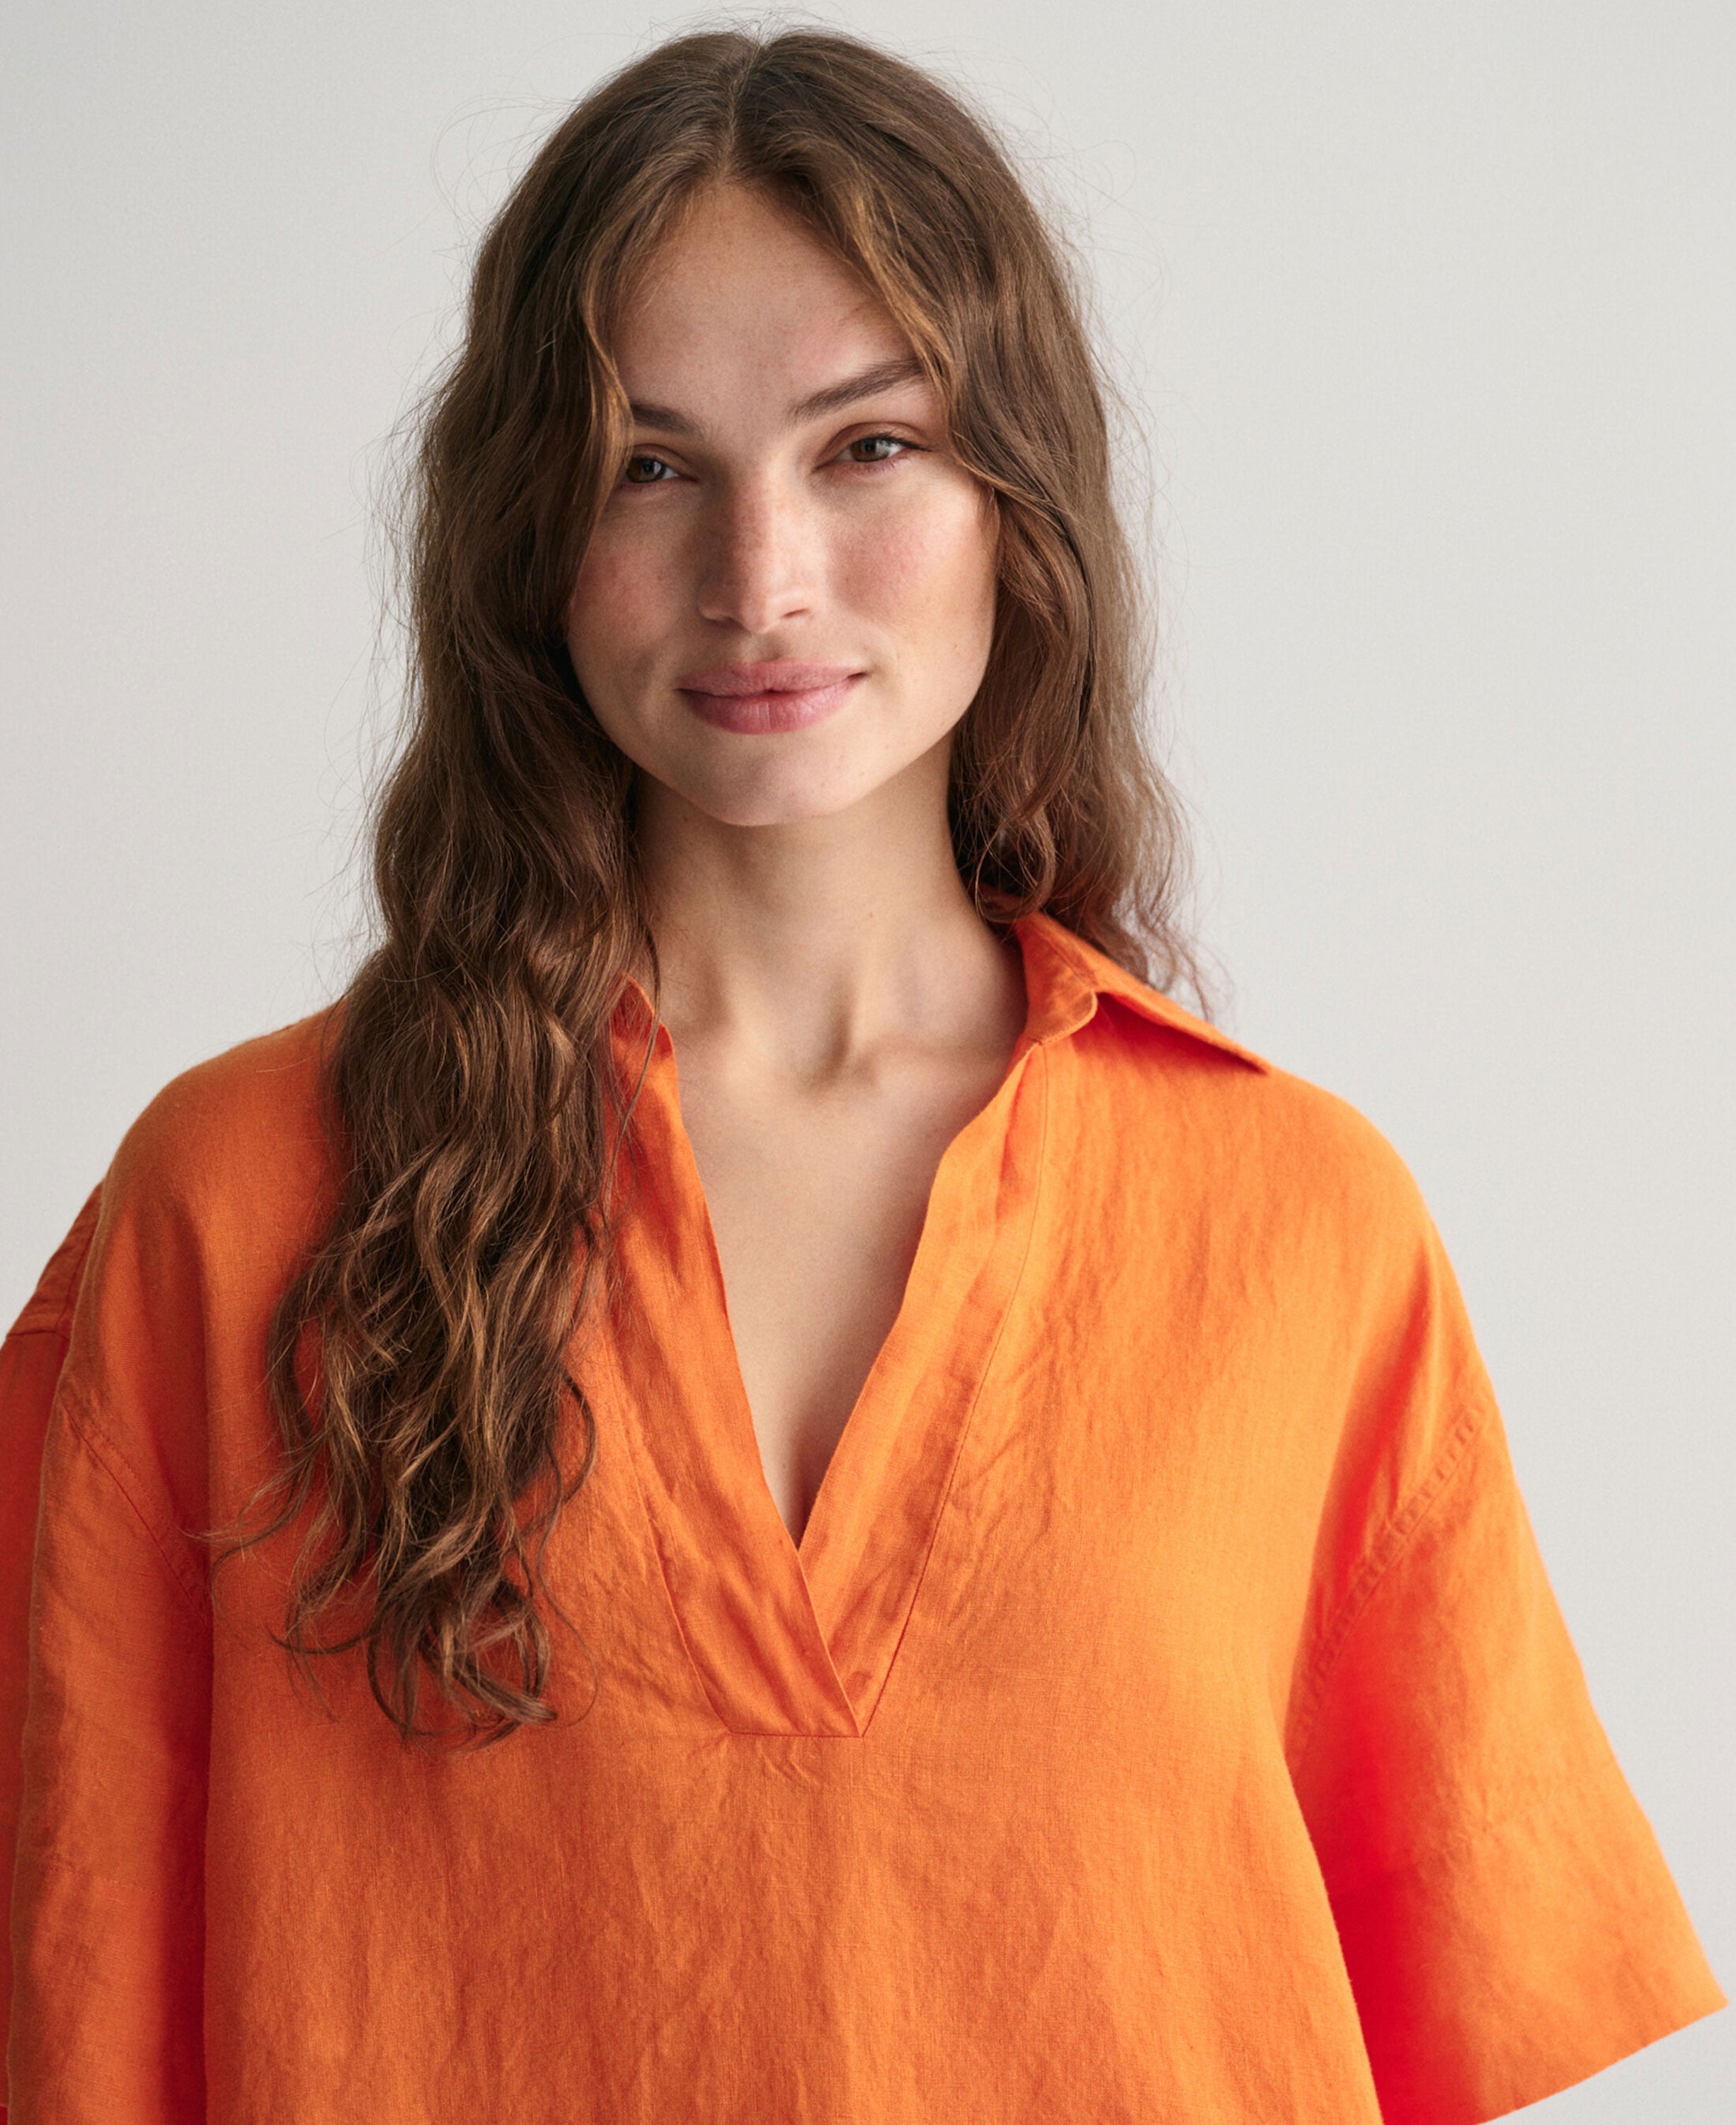 Relaxed Fit Linen Popover Short Sleeve Shirt - Pumpkin Orange